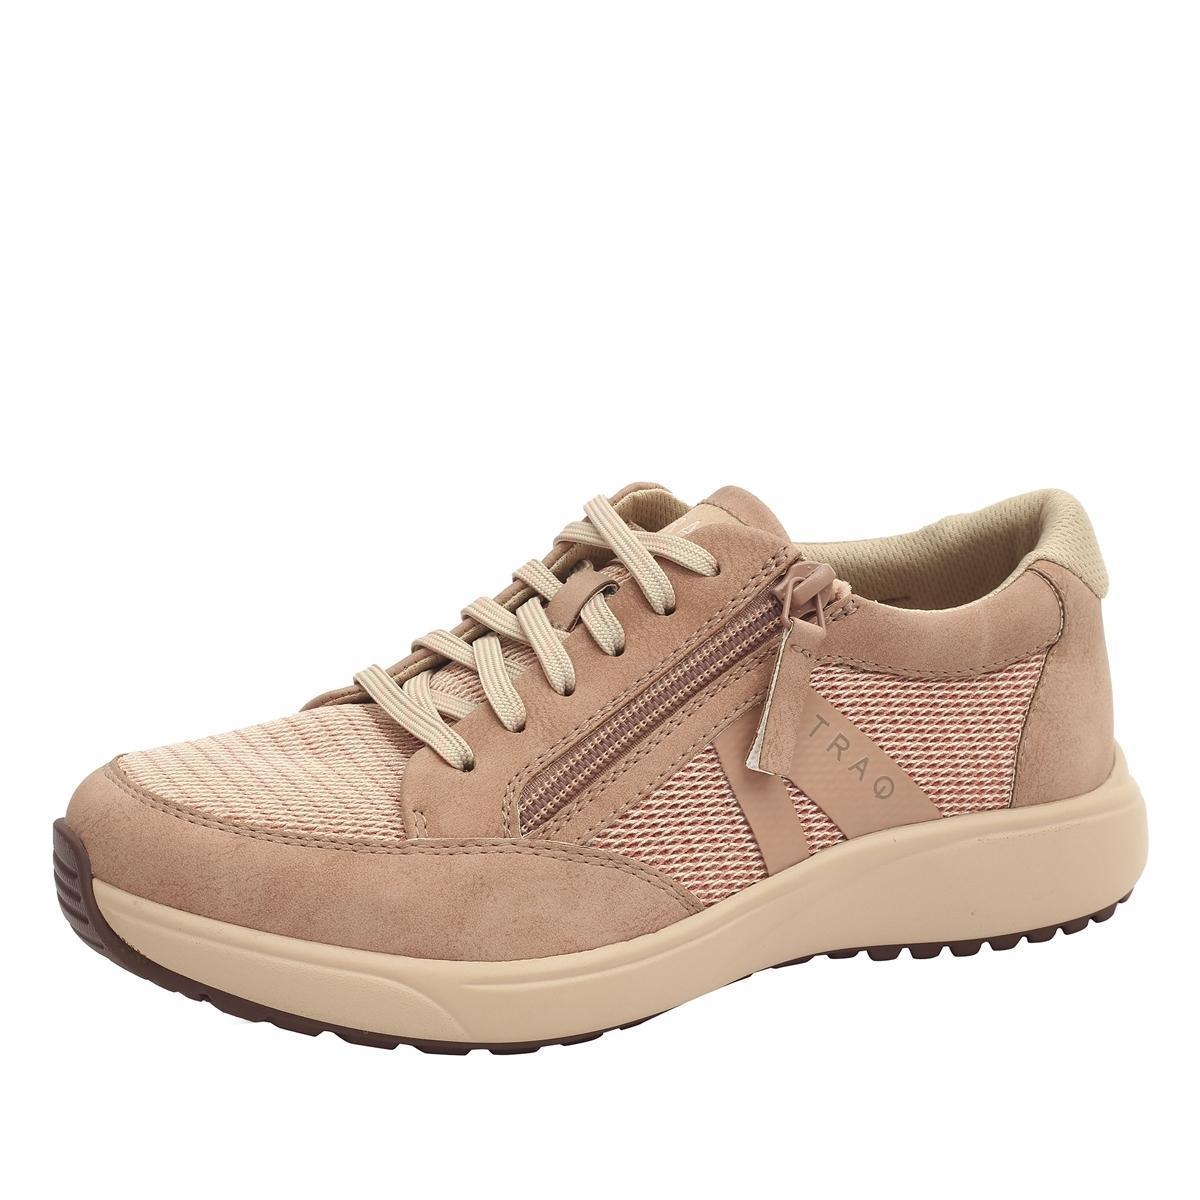 Alegria Womens TRAQ Eazee Athletic Hiking Sneaker Shoes w/ Side Zipper - Adobe - EUR 38